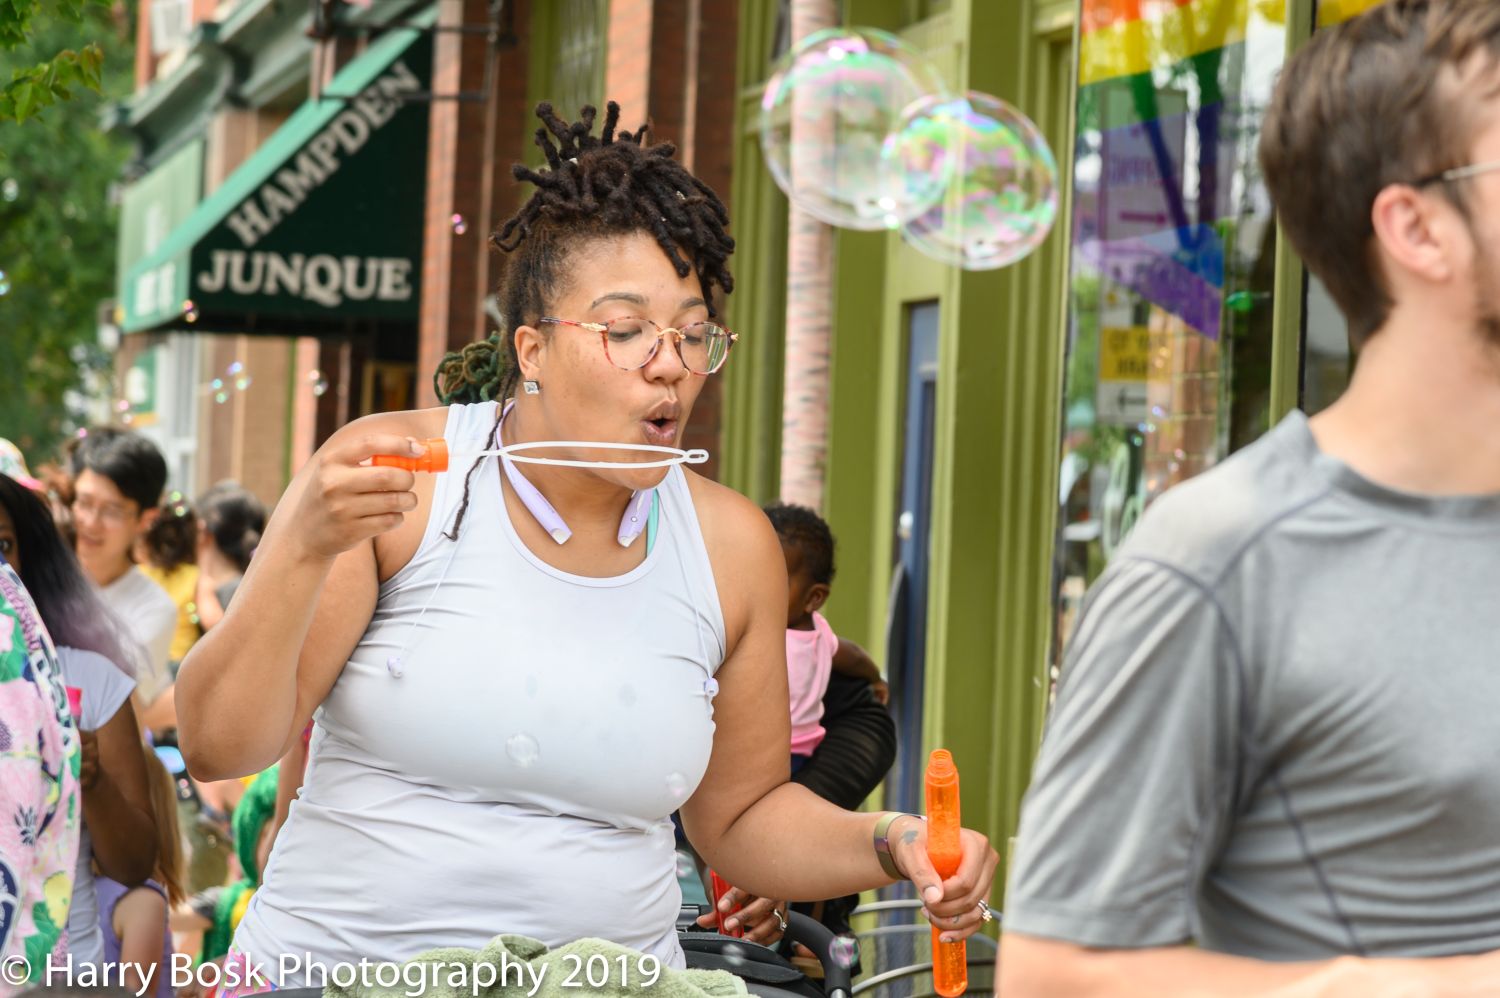 5th Annual Bubble Parade In Baltimore | Uncustomary